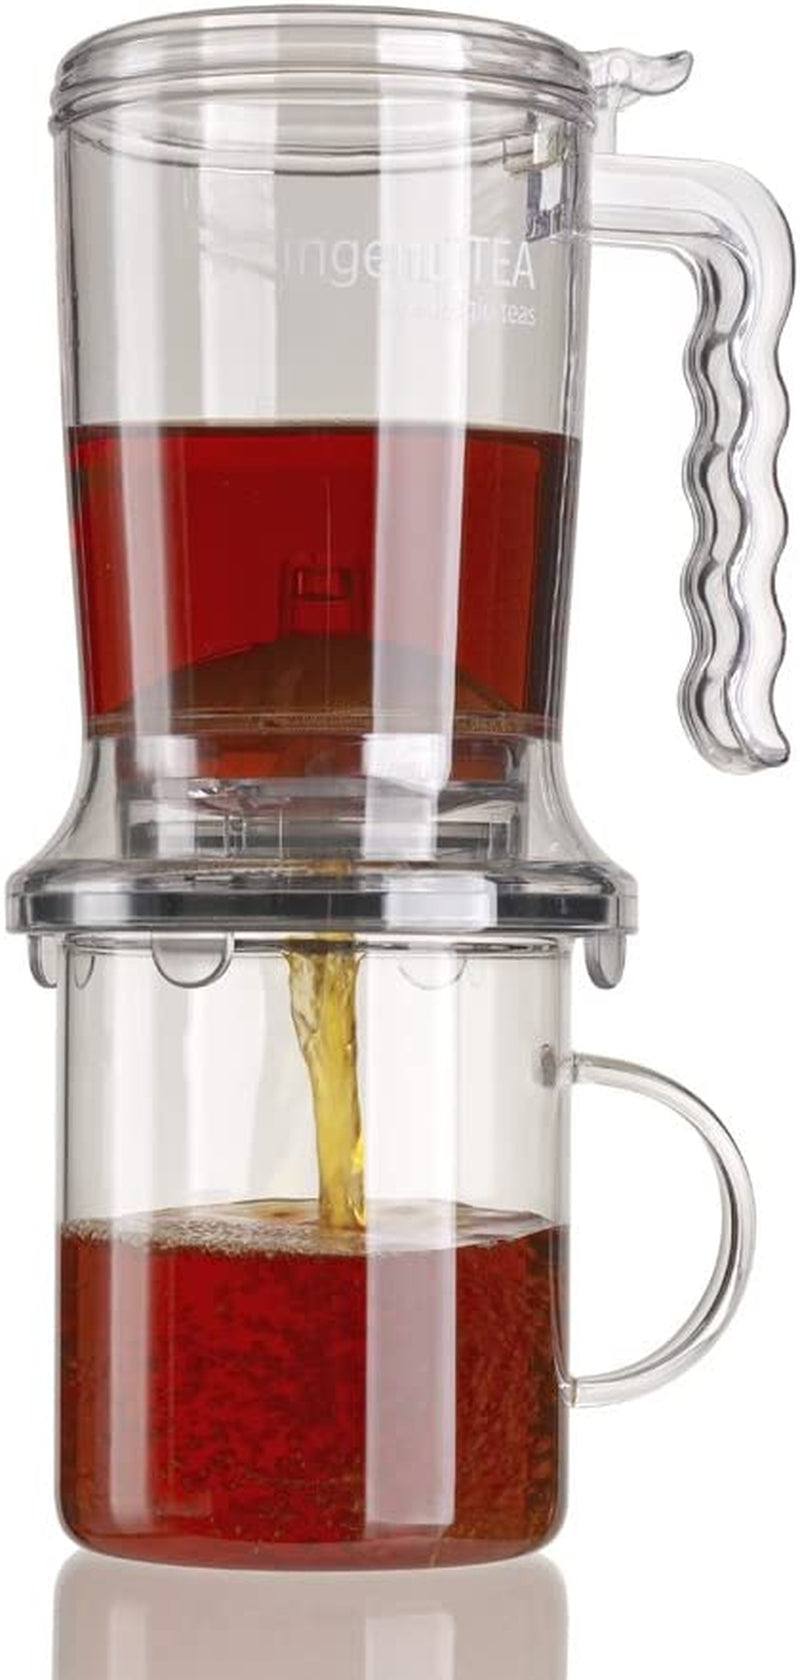 Ingenuitea Bottom-Dispensing Teapot,Clear,16 Oz